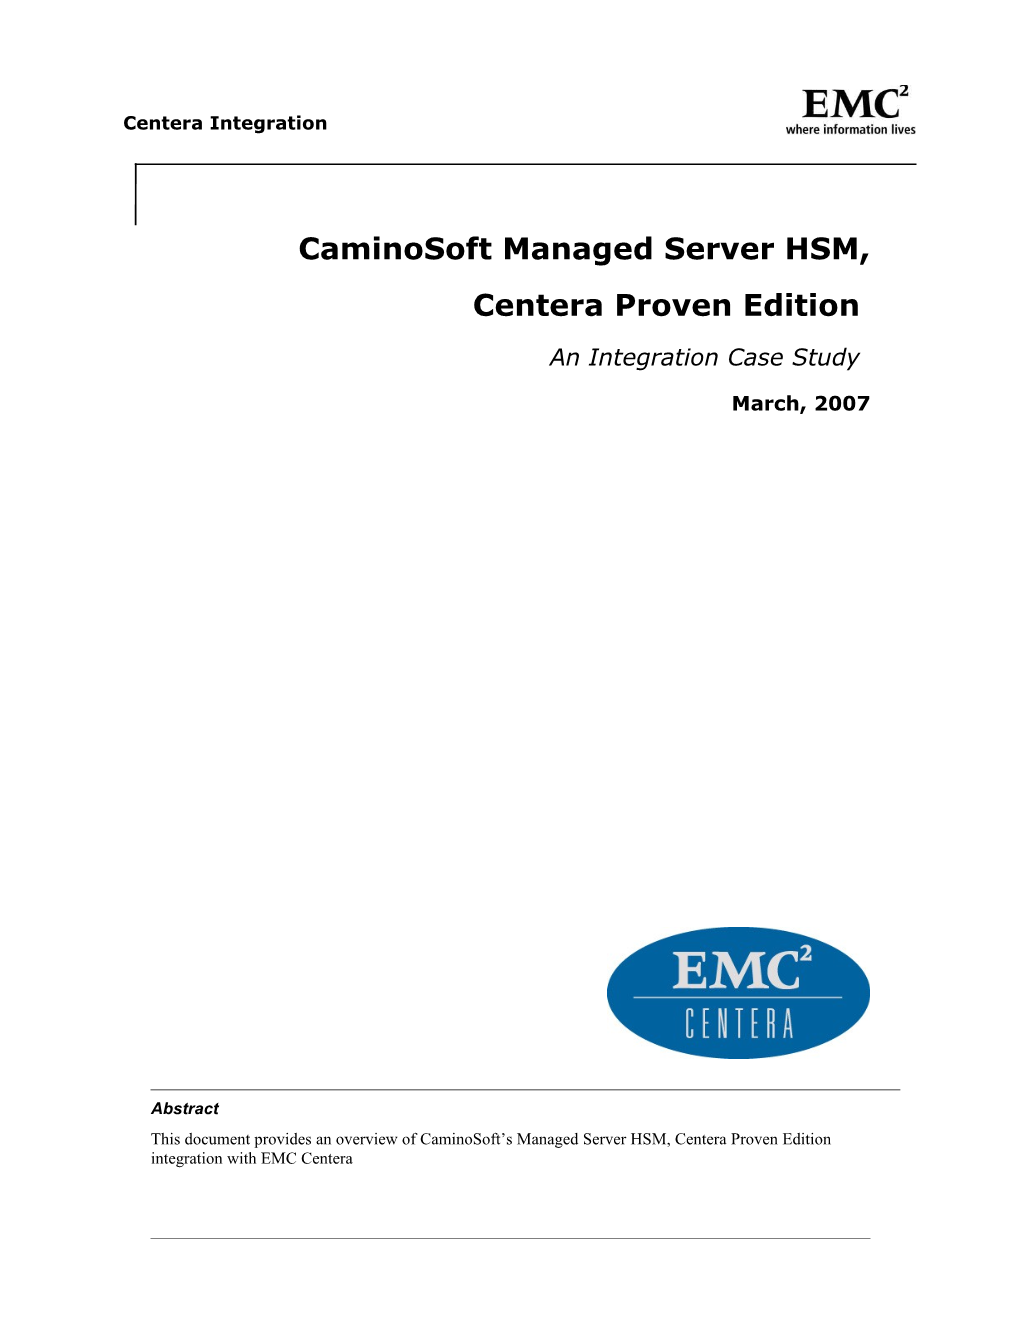 Caminosoft Managed Server HSM